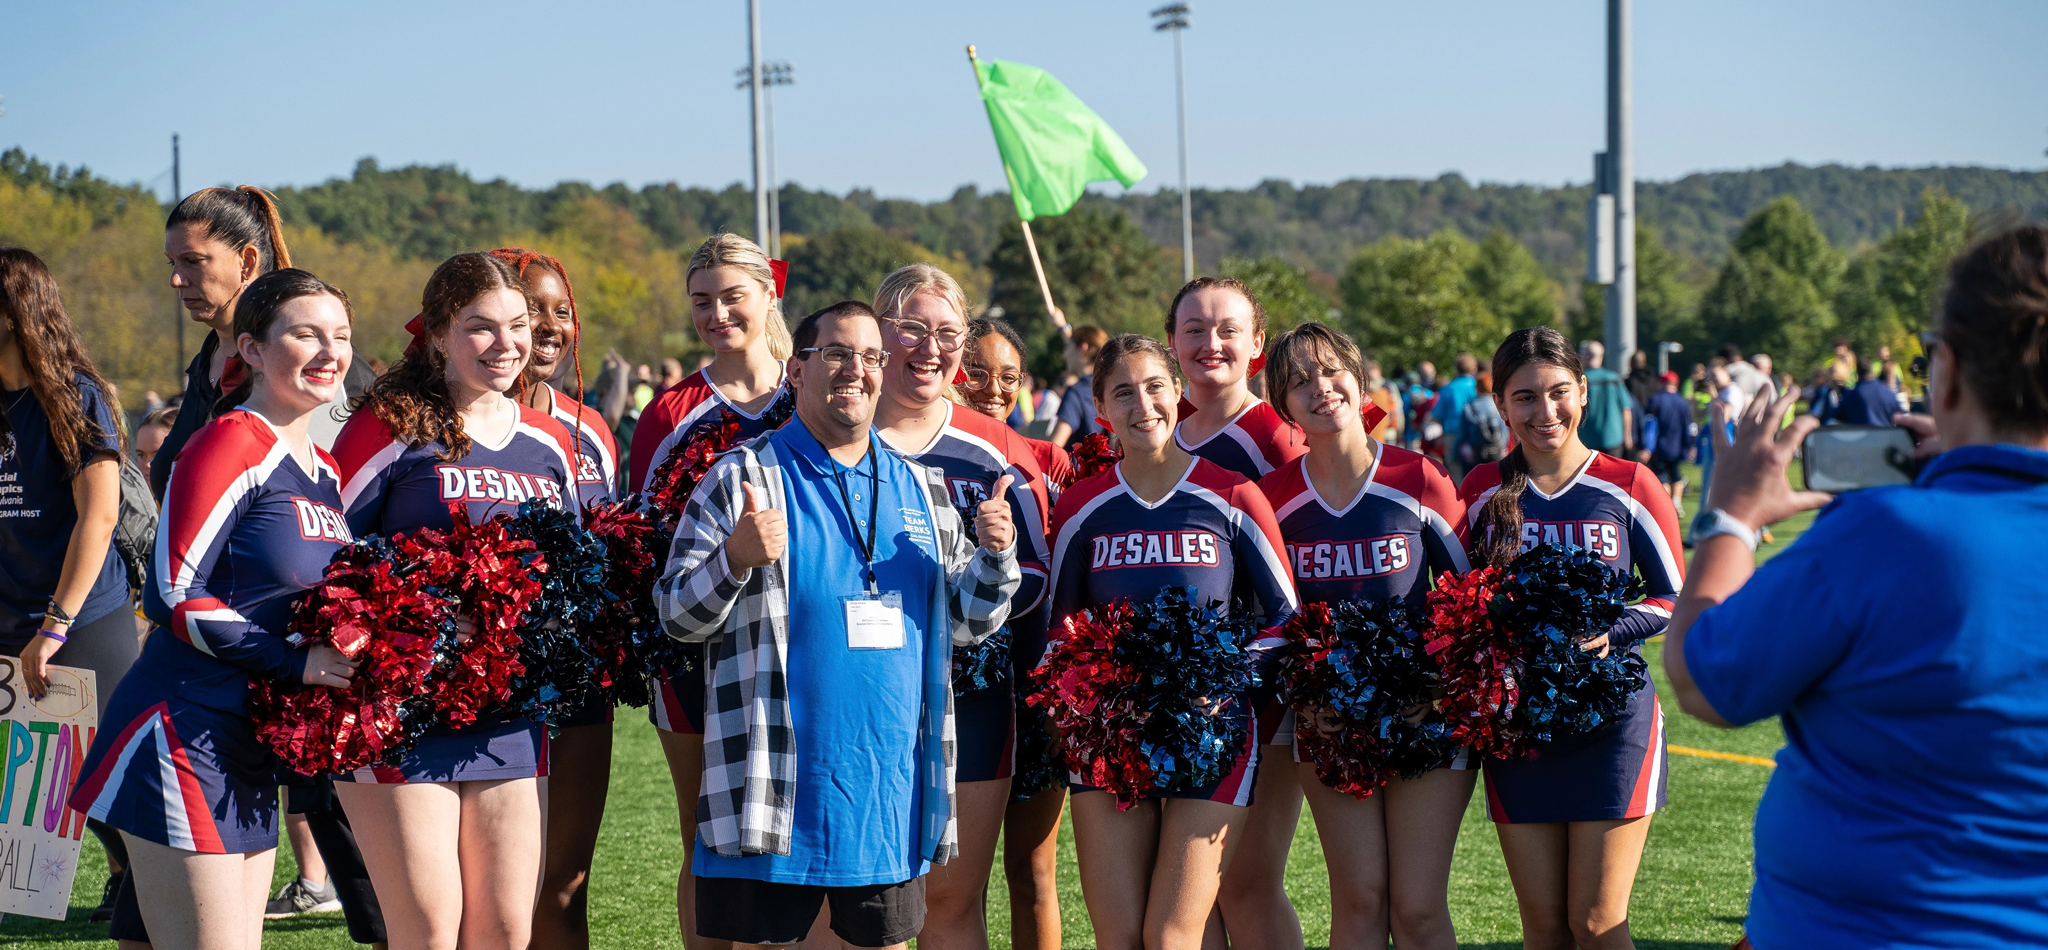 Desales University cheerleaders at Special Olympics event